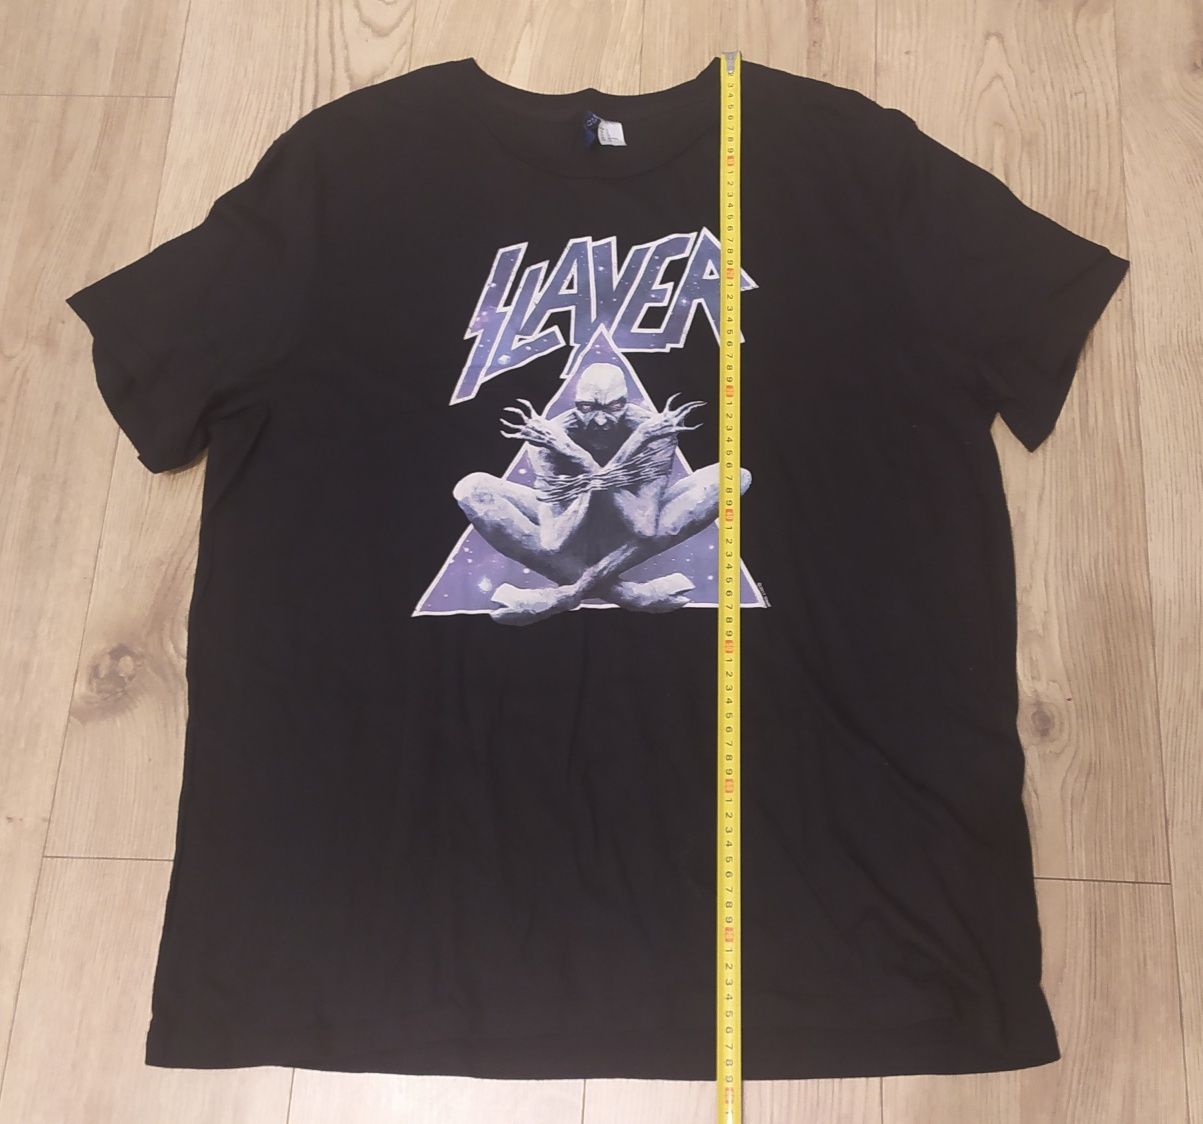 Koszulka Slayer, t-shirt, rozmiar XL, merch, vintage,old school, metal